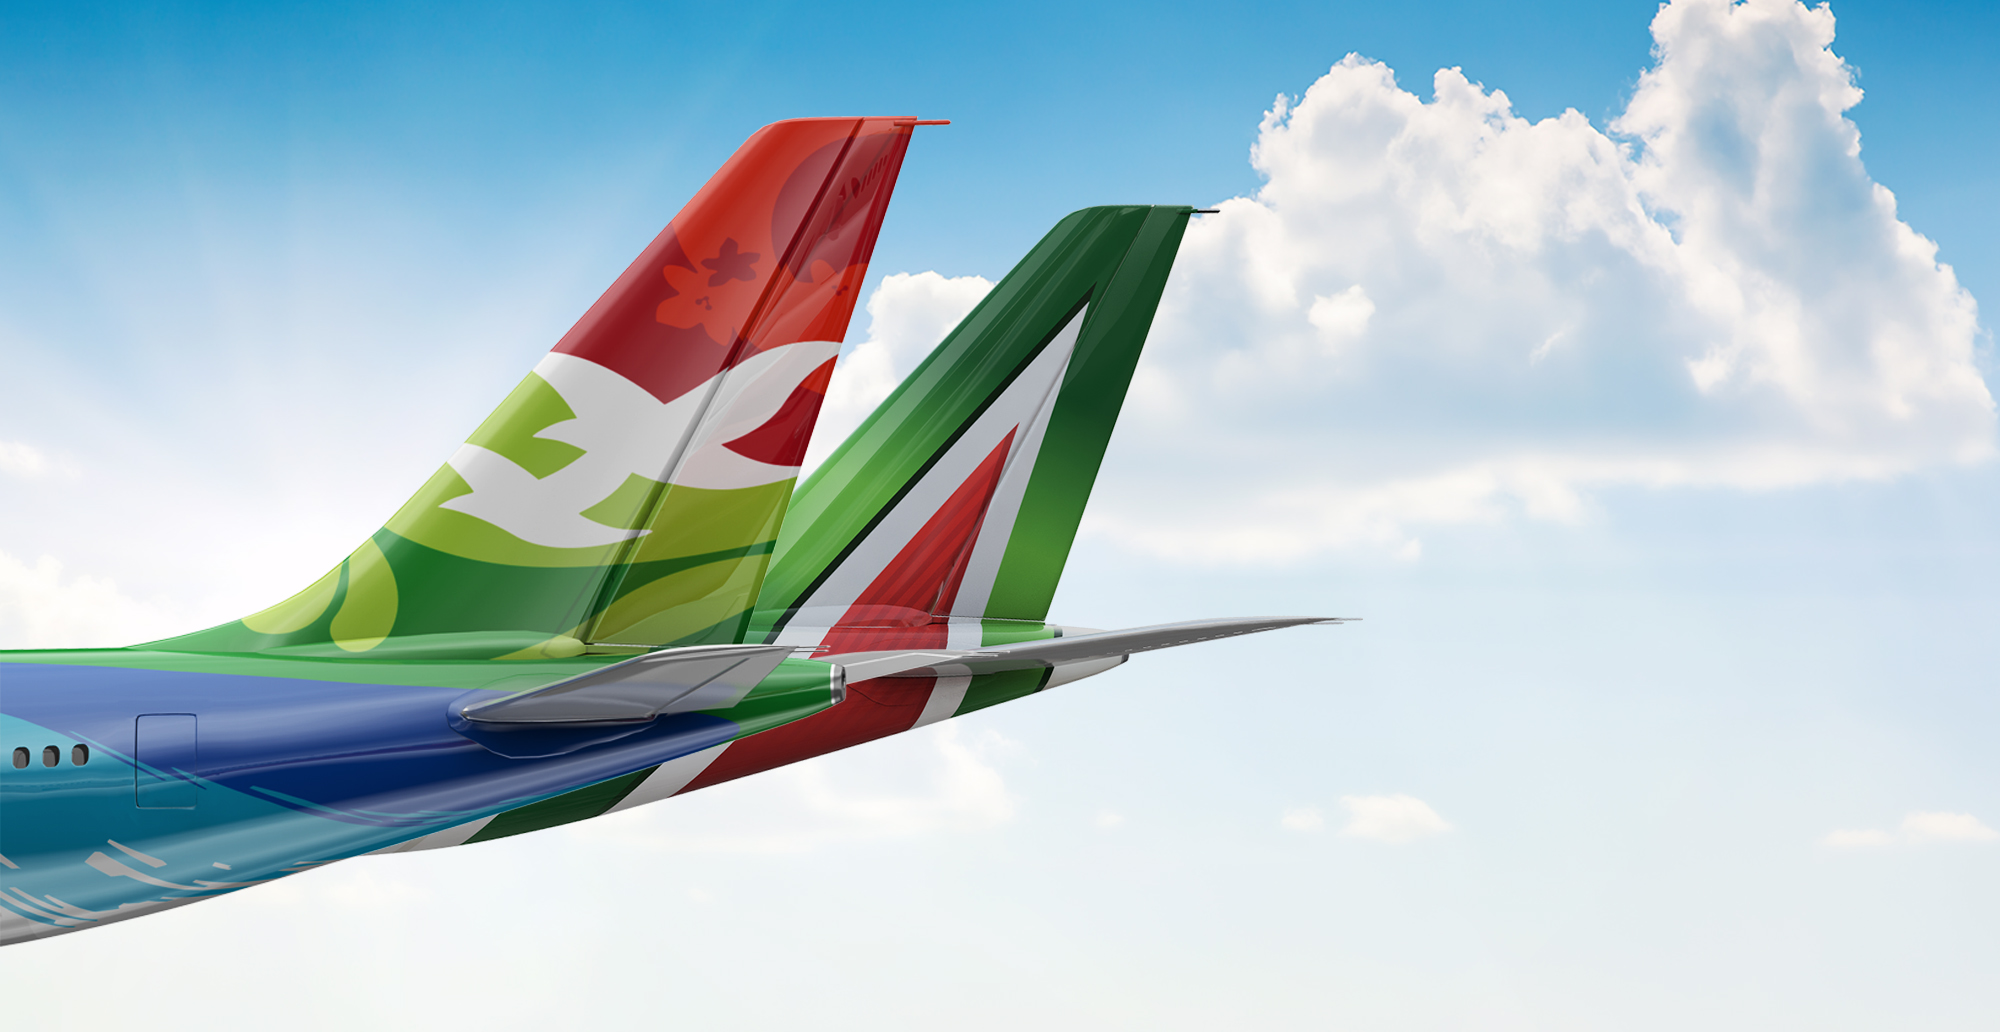 E’accordo tra Alitalia e Air Seychelles